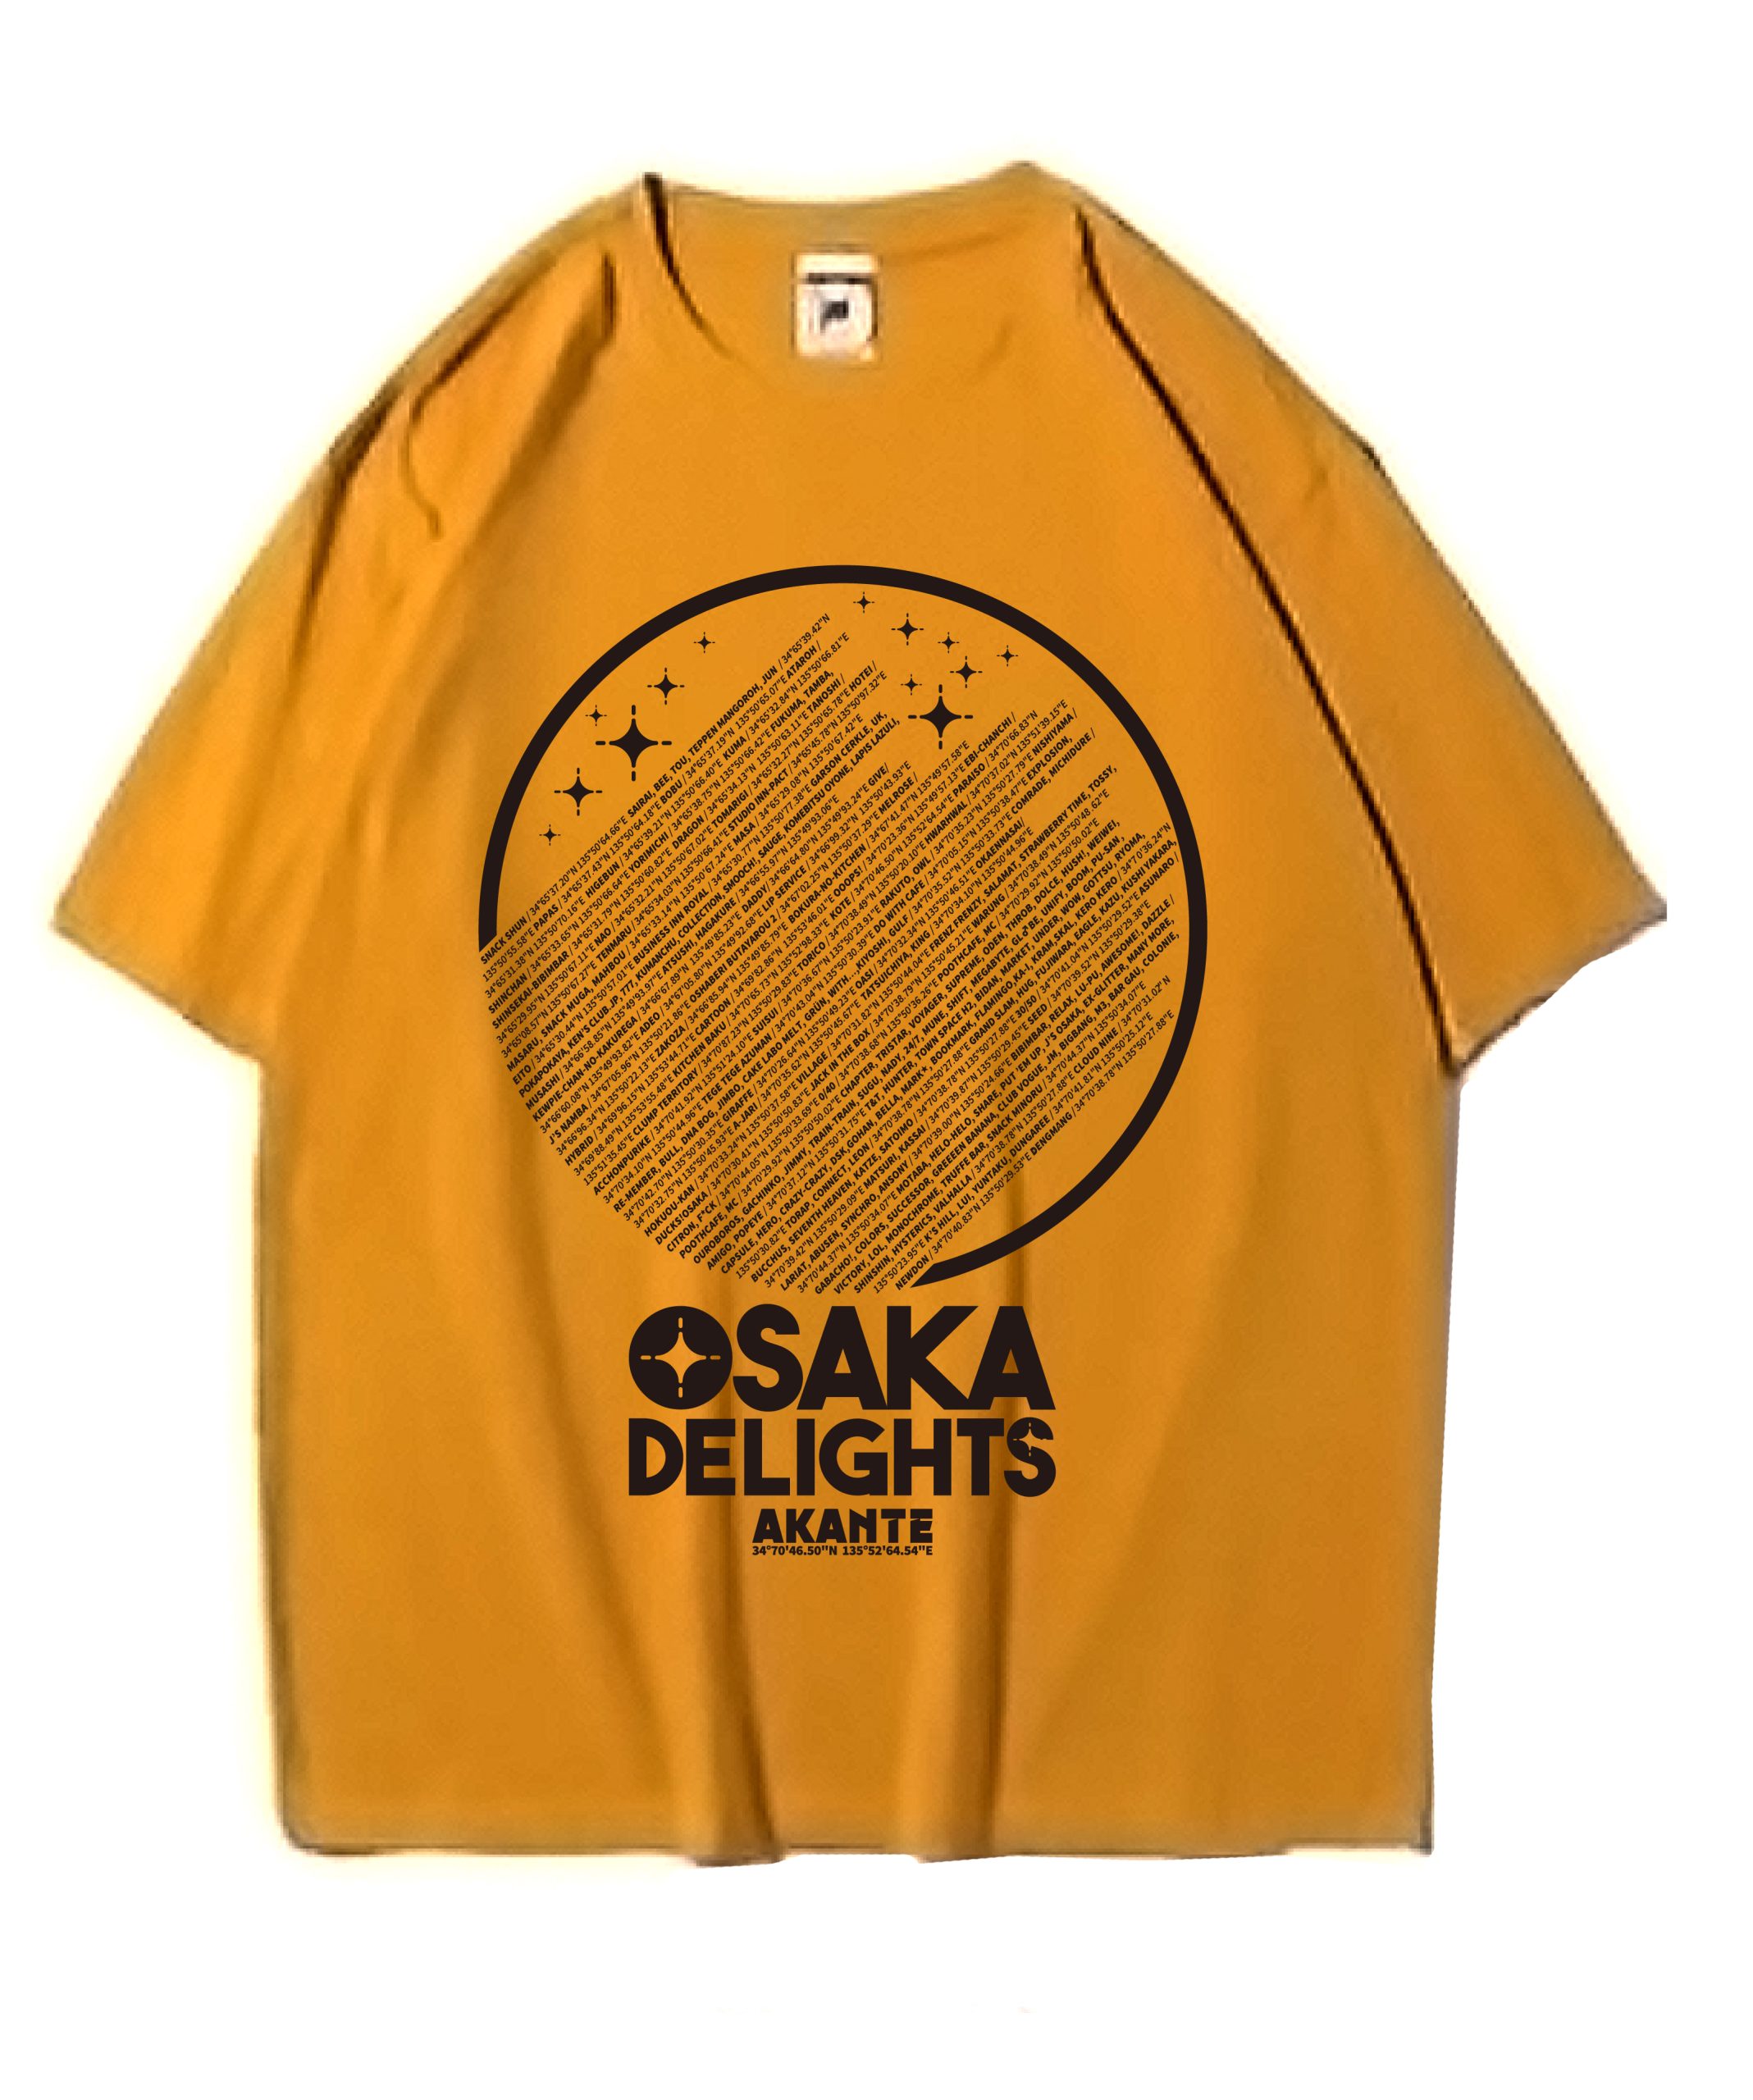 OSAKA DELIGHTS Tシャツ イエローxブラック